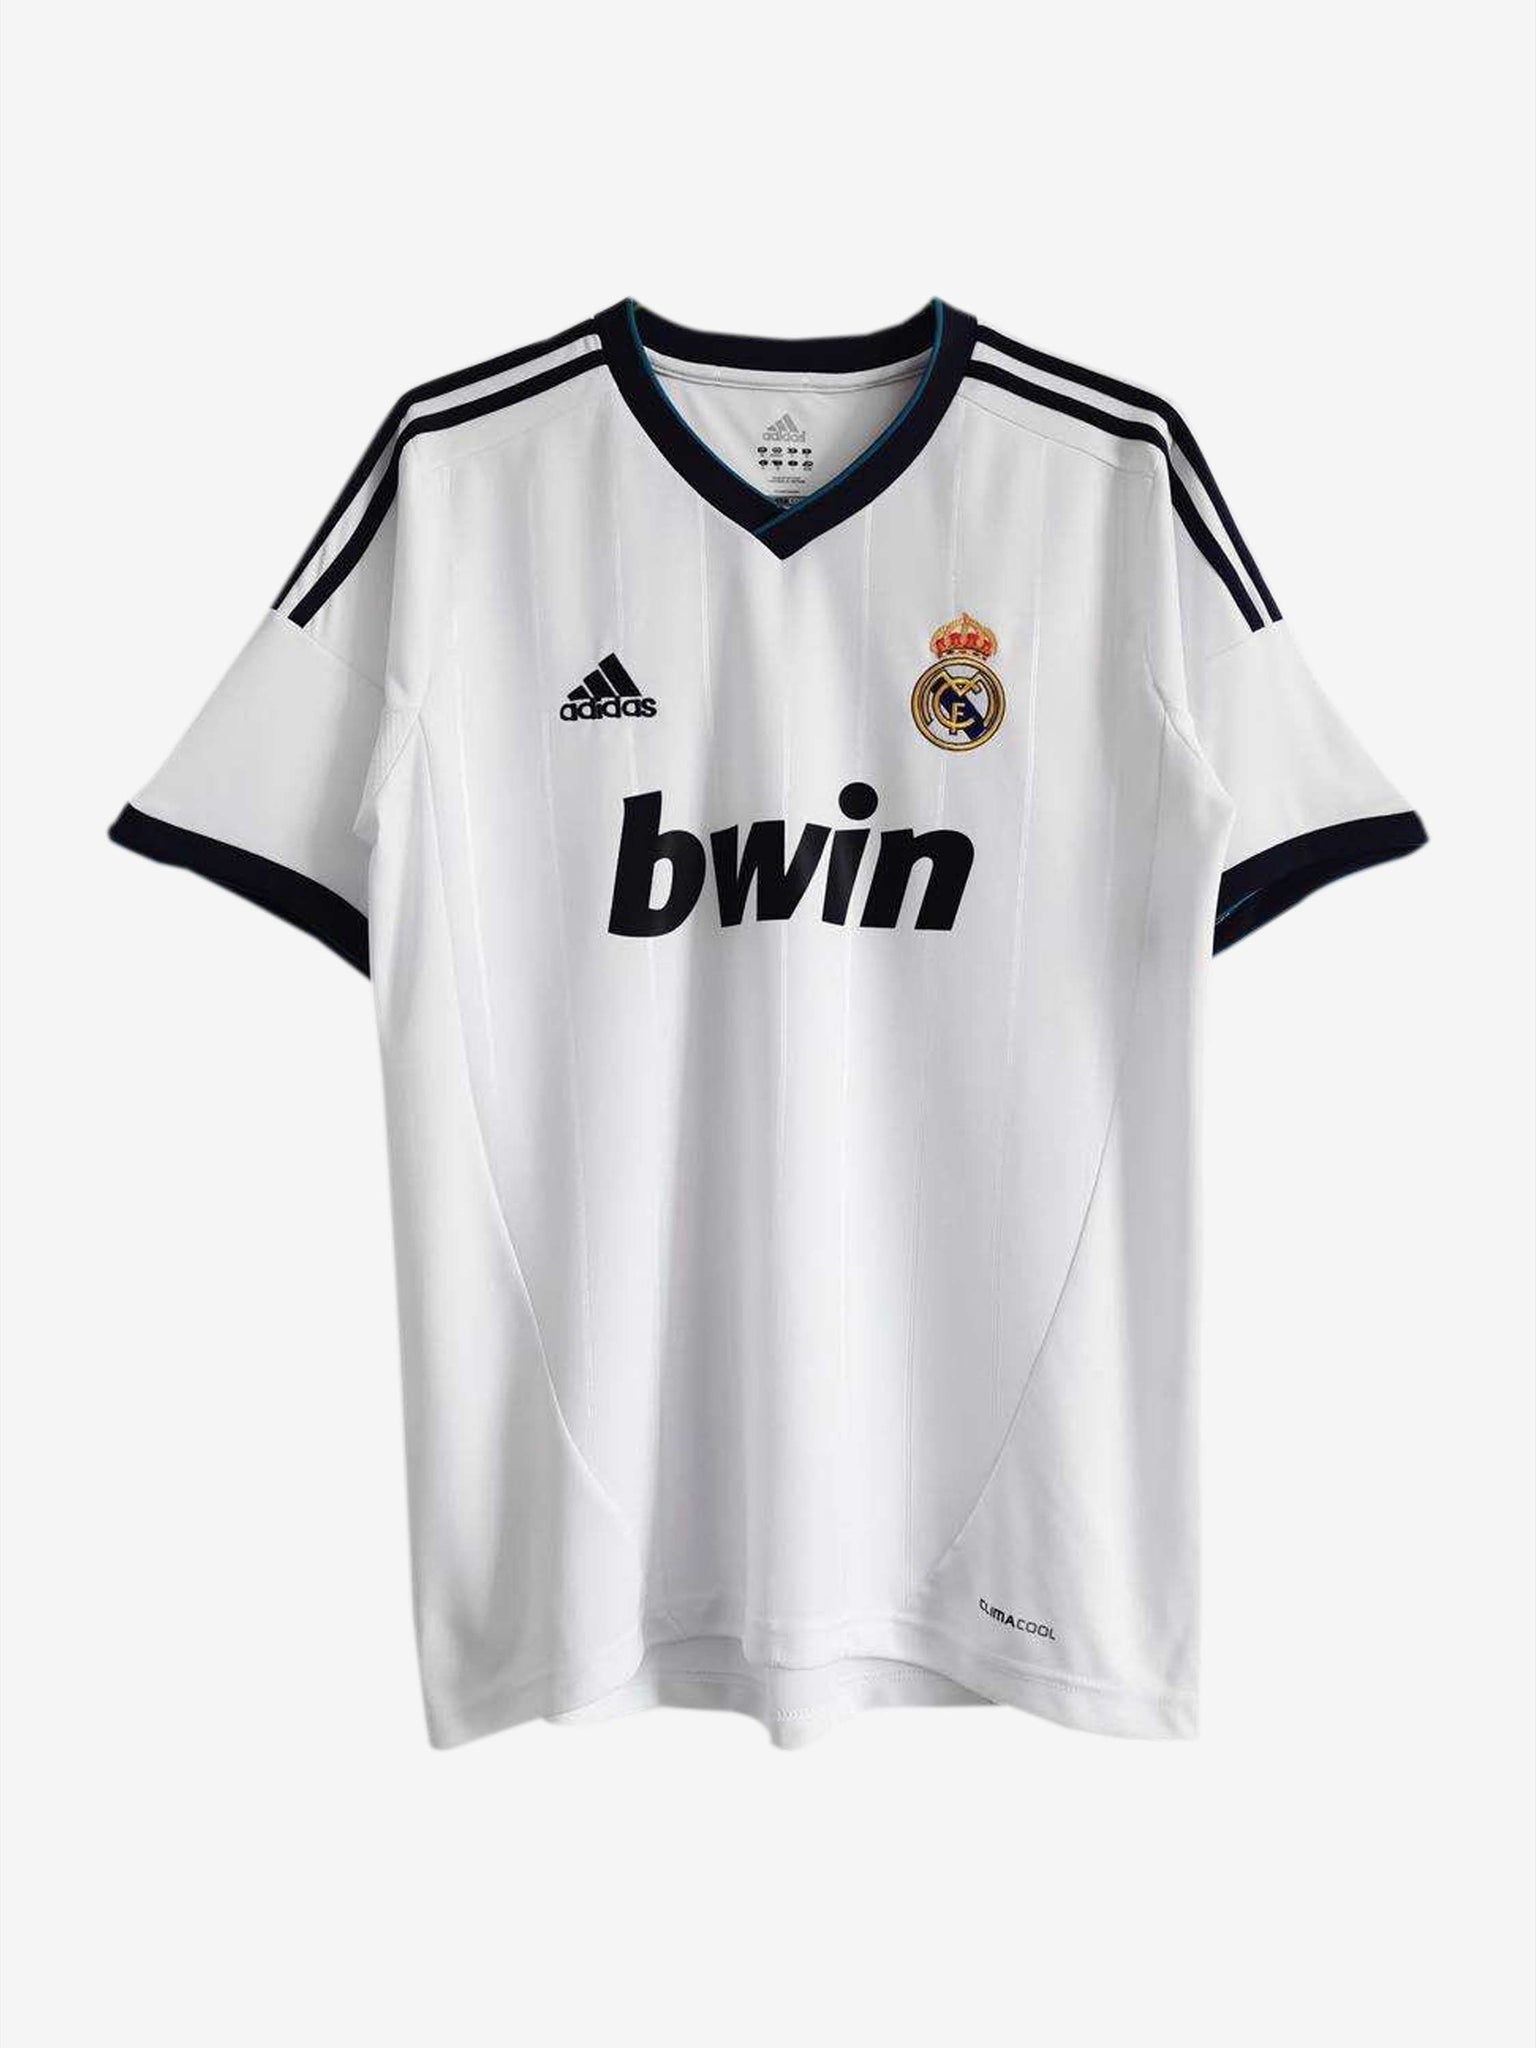 Real Madrid Jersey, Real Madrid Apparel